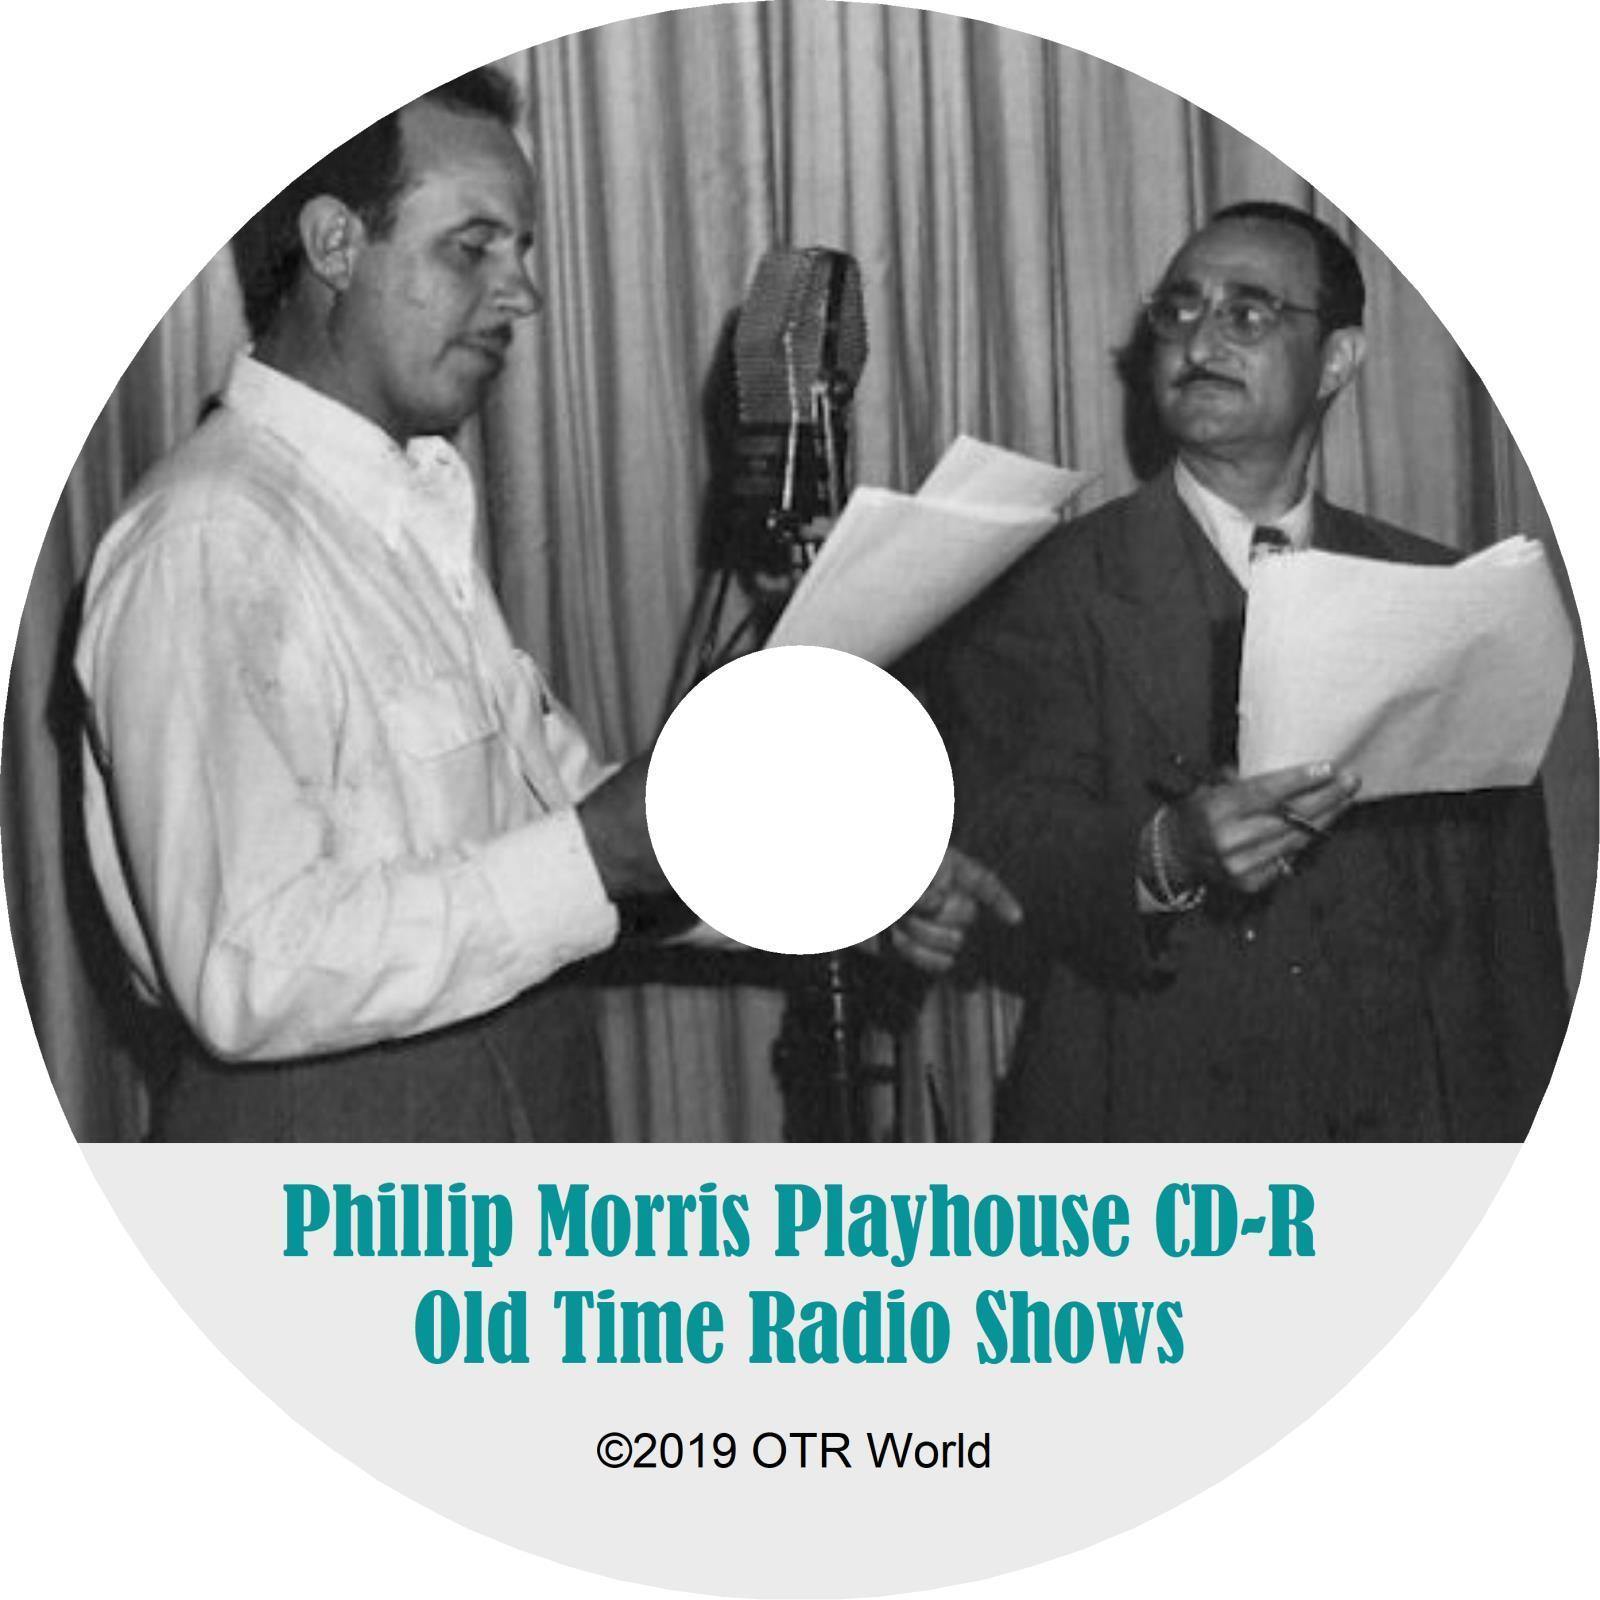 Philip Morris Playhouse OTR Old Time Radio Shows MP3 On CD 10 Episodes - OTR World